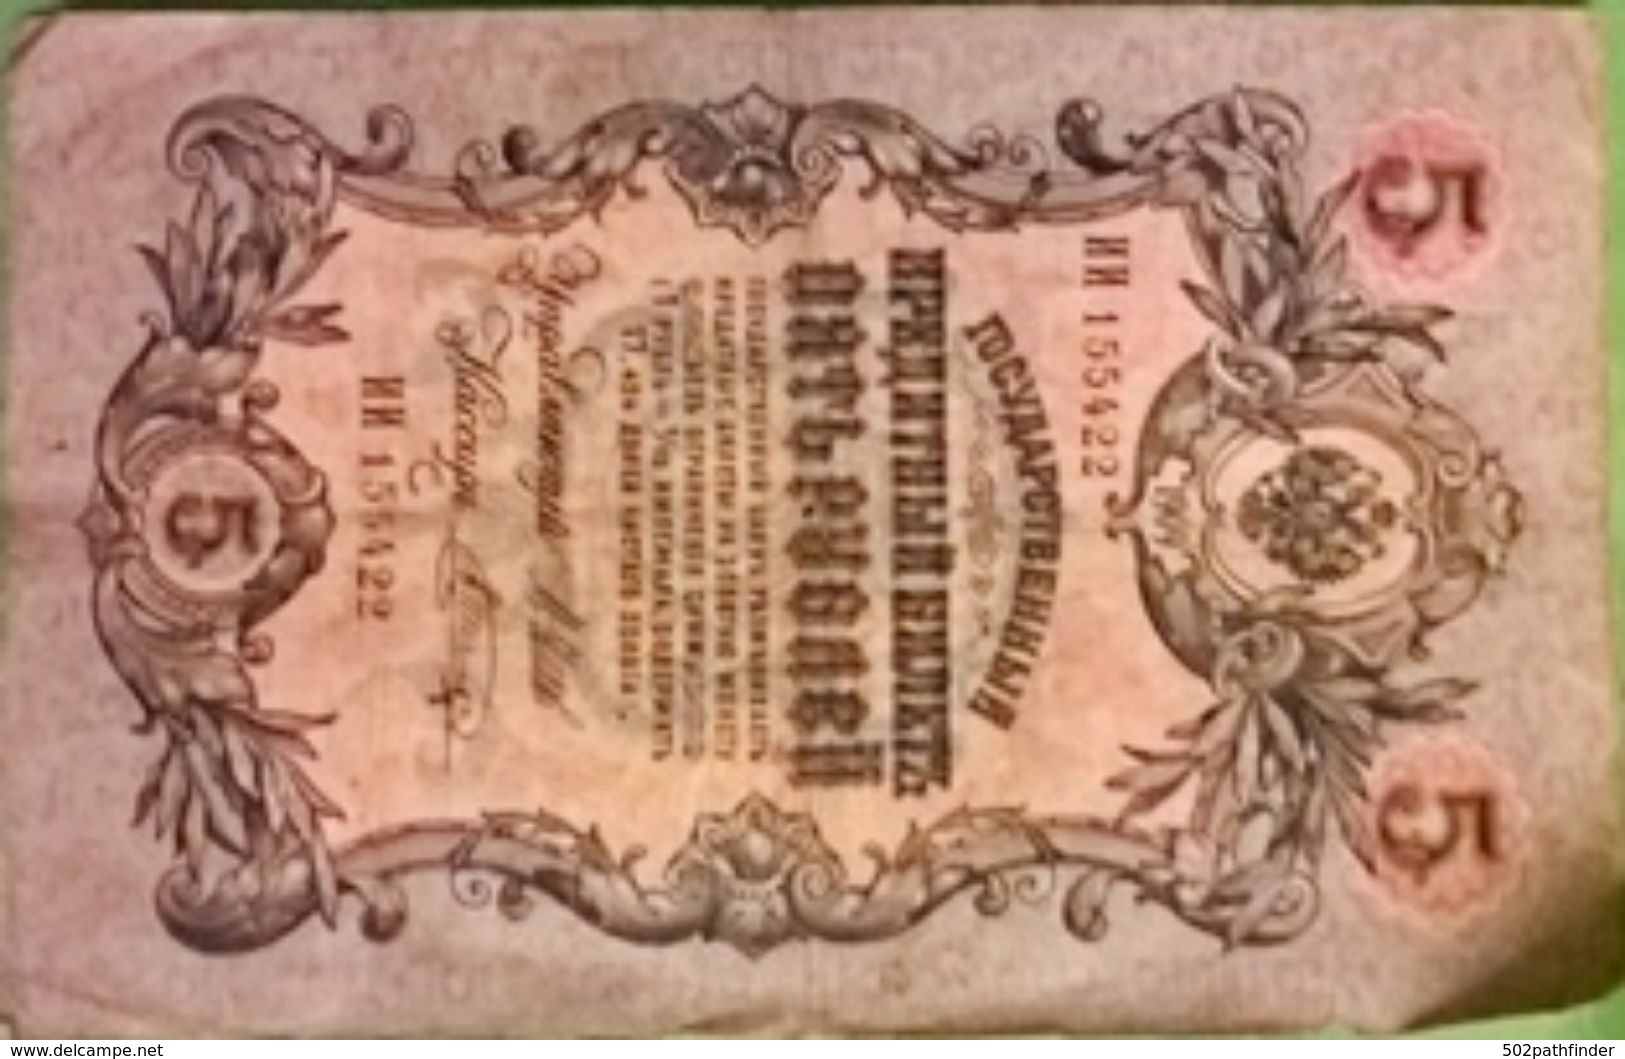 5  ROUBLE  1909 - пять рублей - I I - 155422  - Shipov - Russia